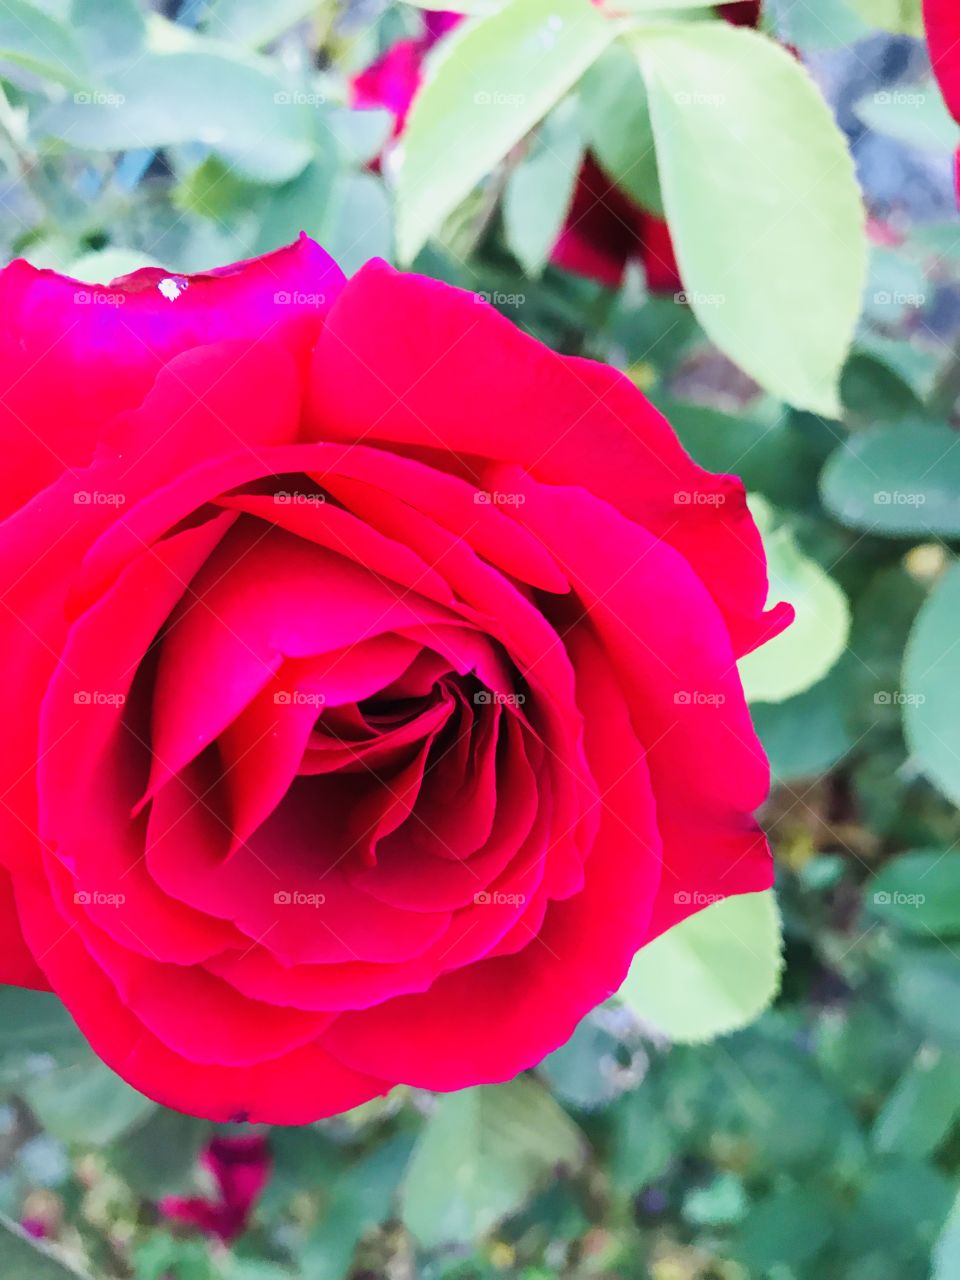 Red rose brightening my backyard garden 